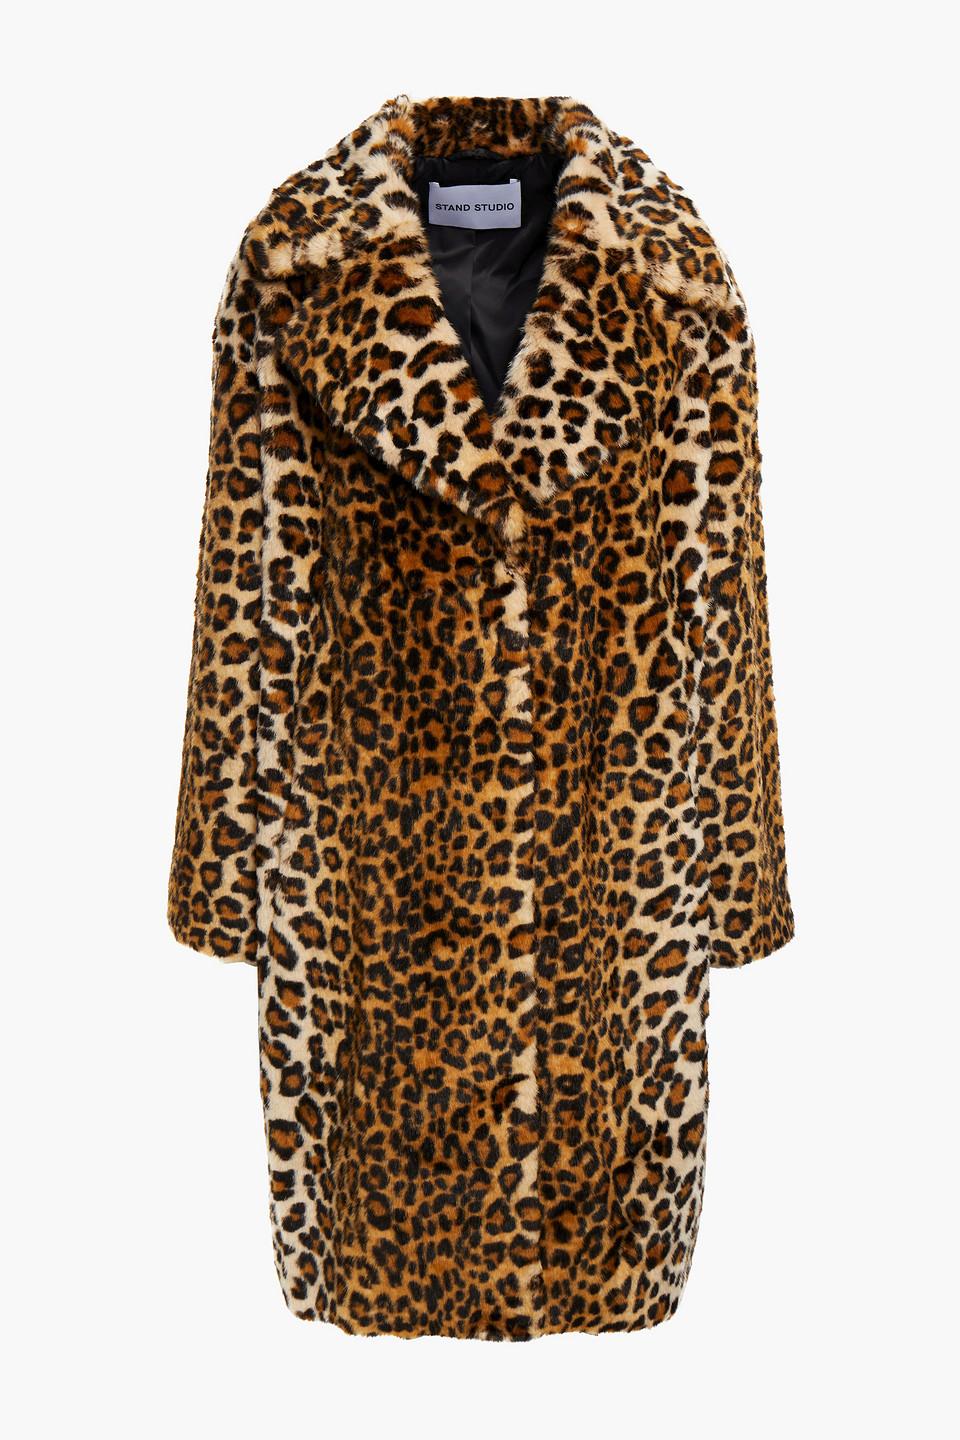 Stand Studio Camille Cocoon Leopard-print Faux Fur Coat | Lyst